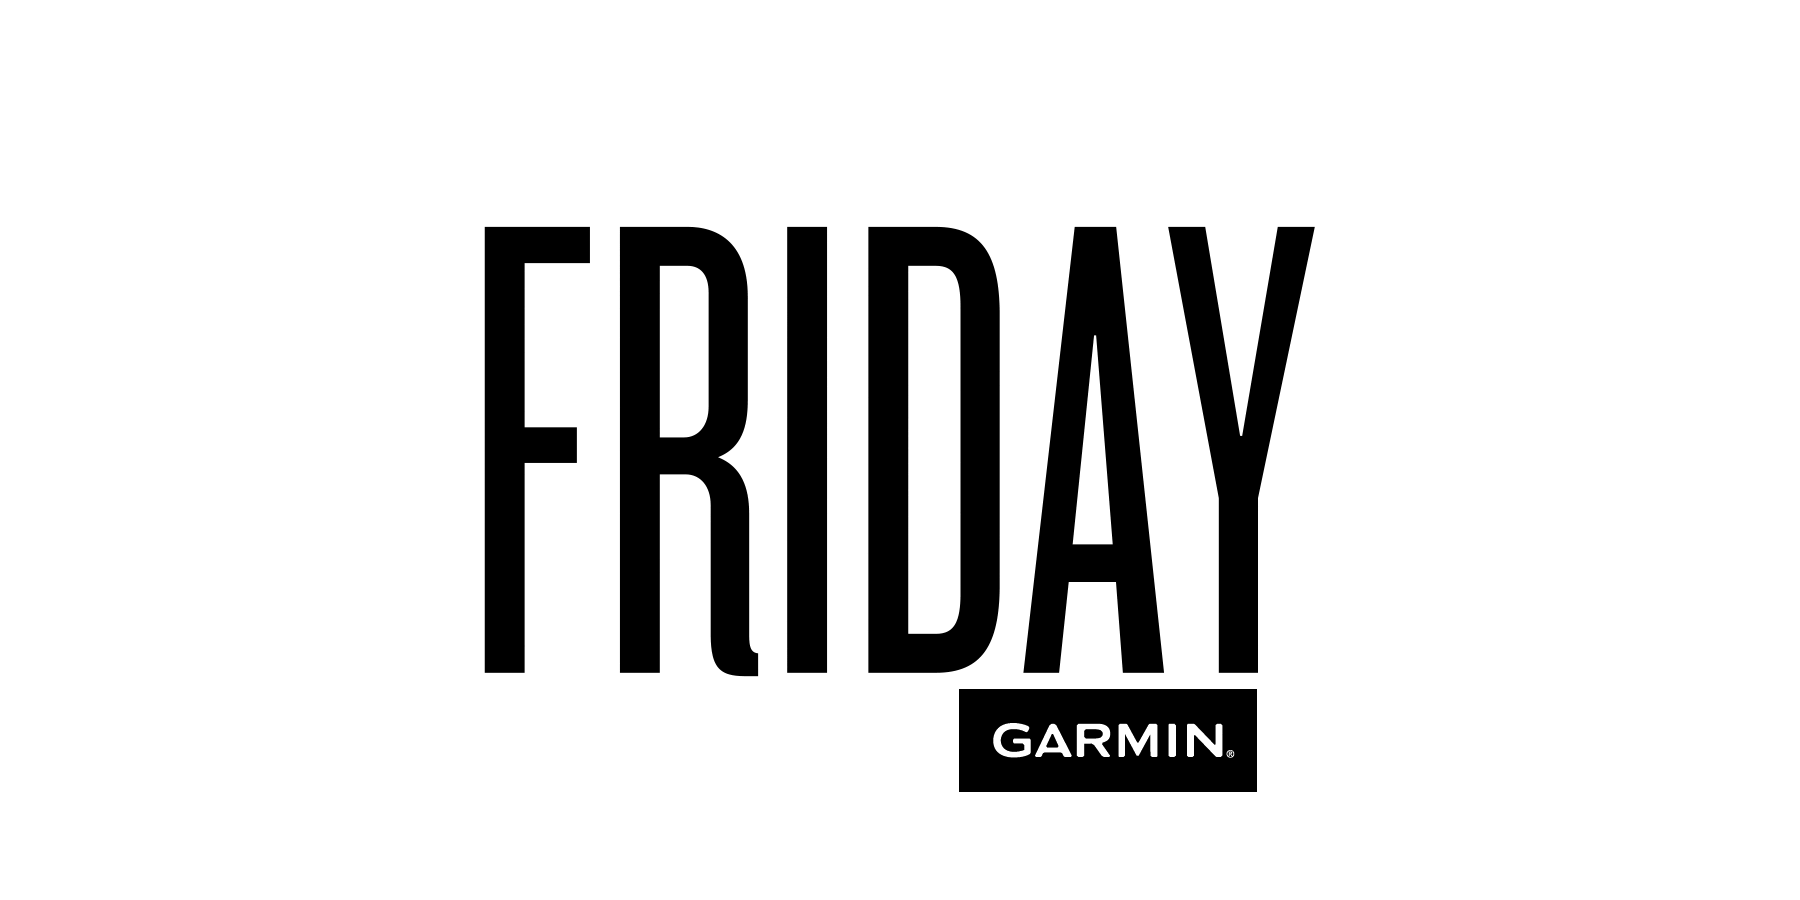 Days Of The Week Countdown Sticker by Garmin